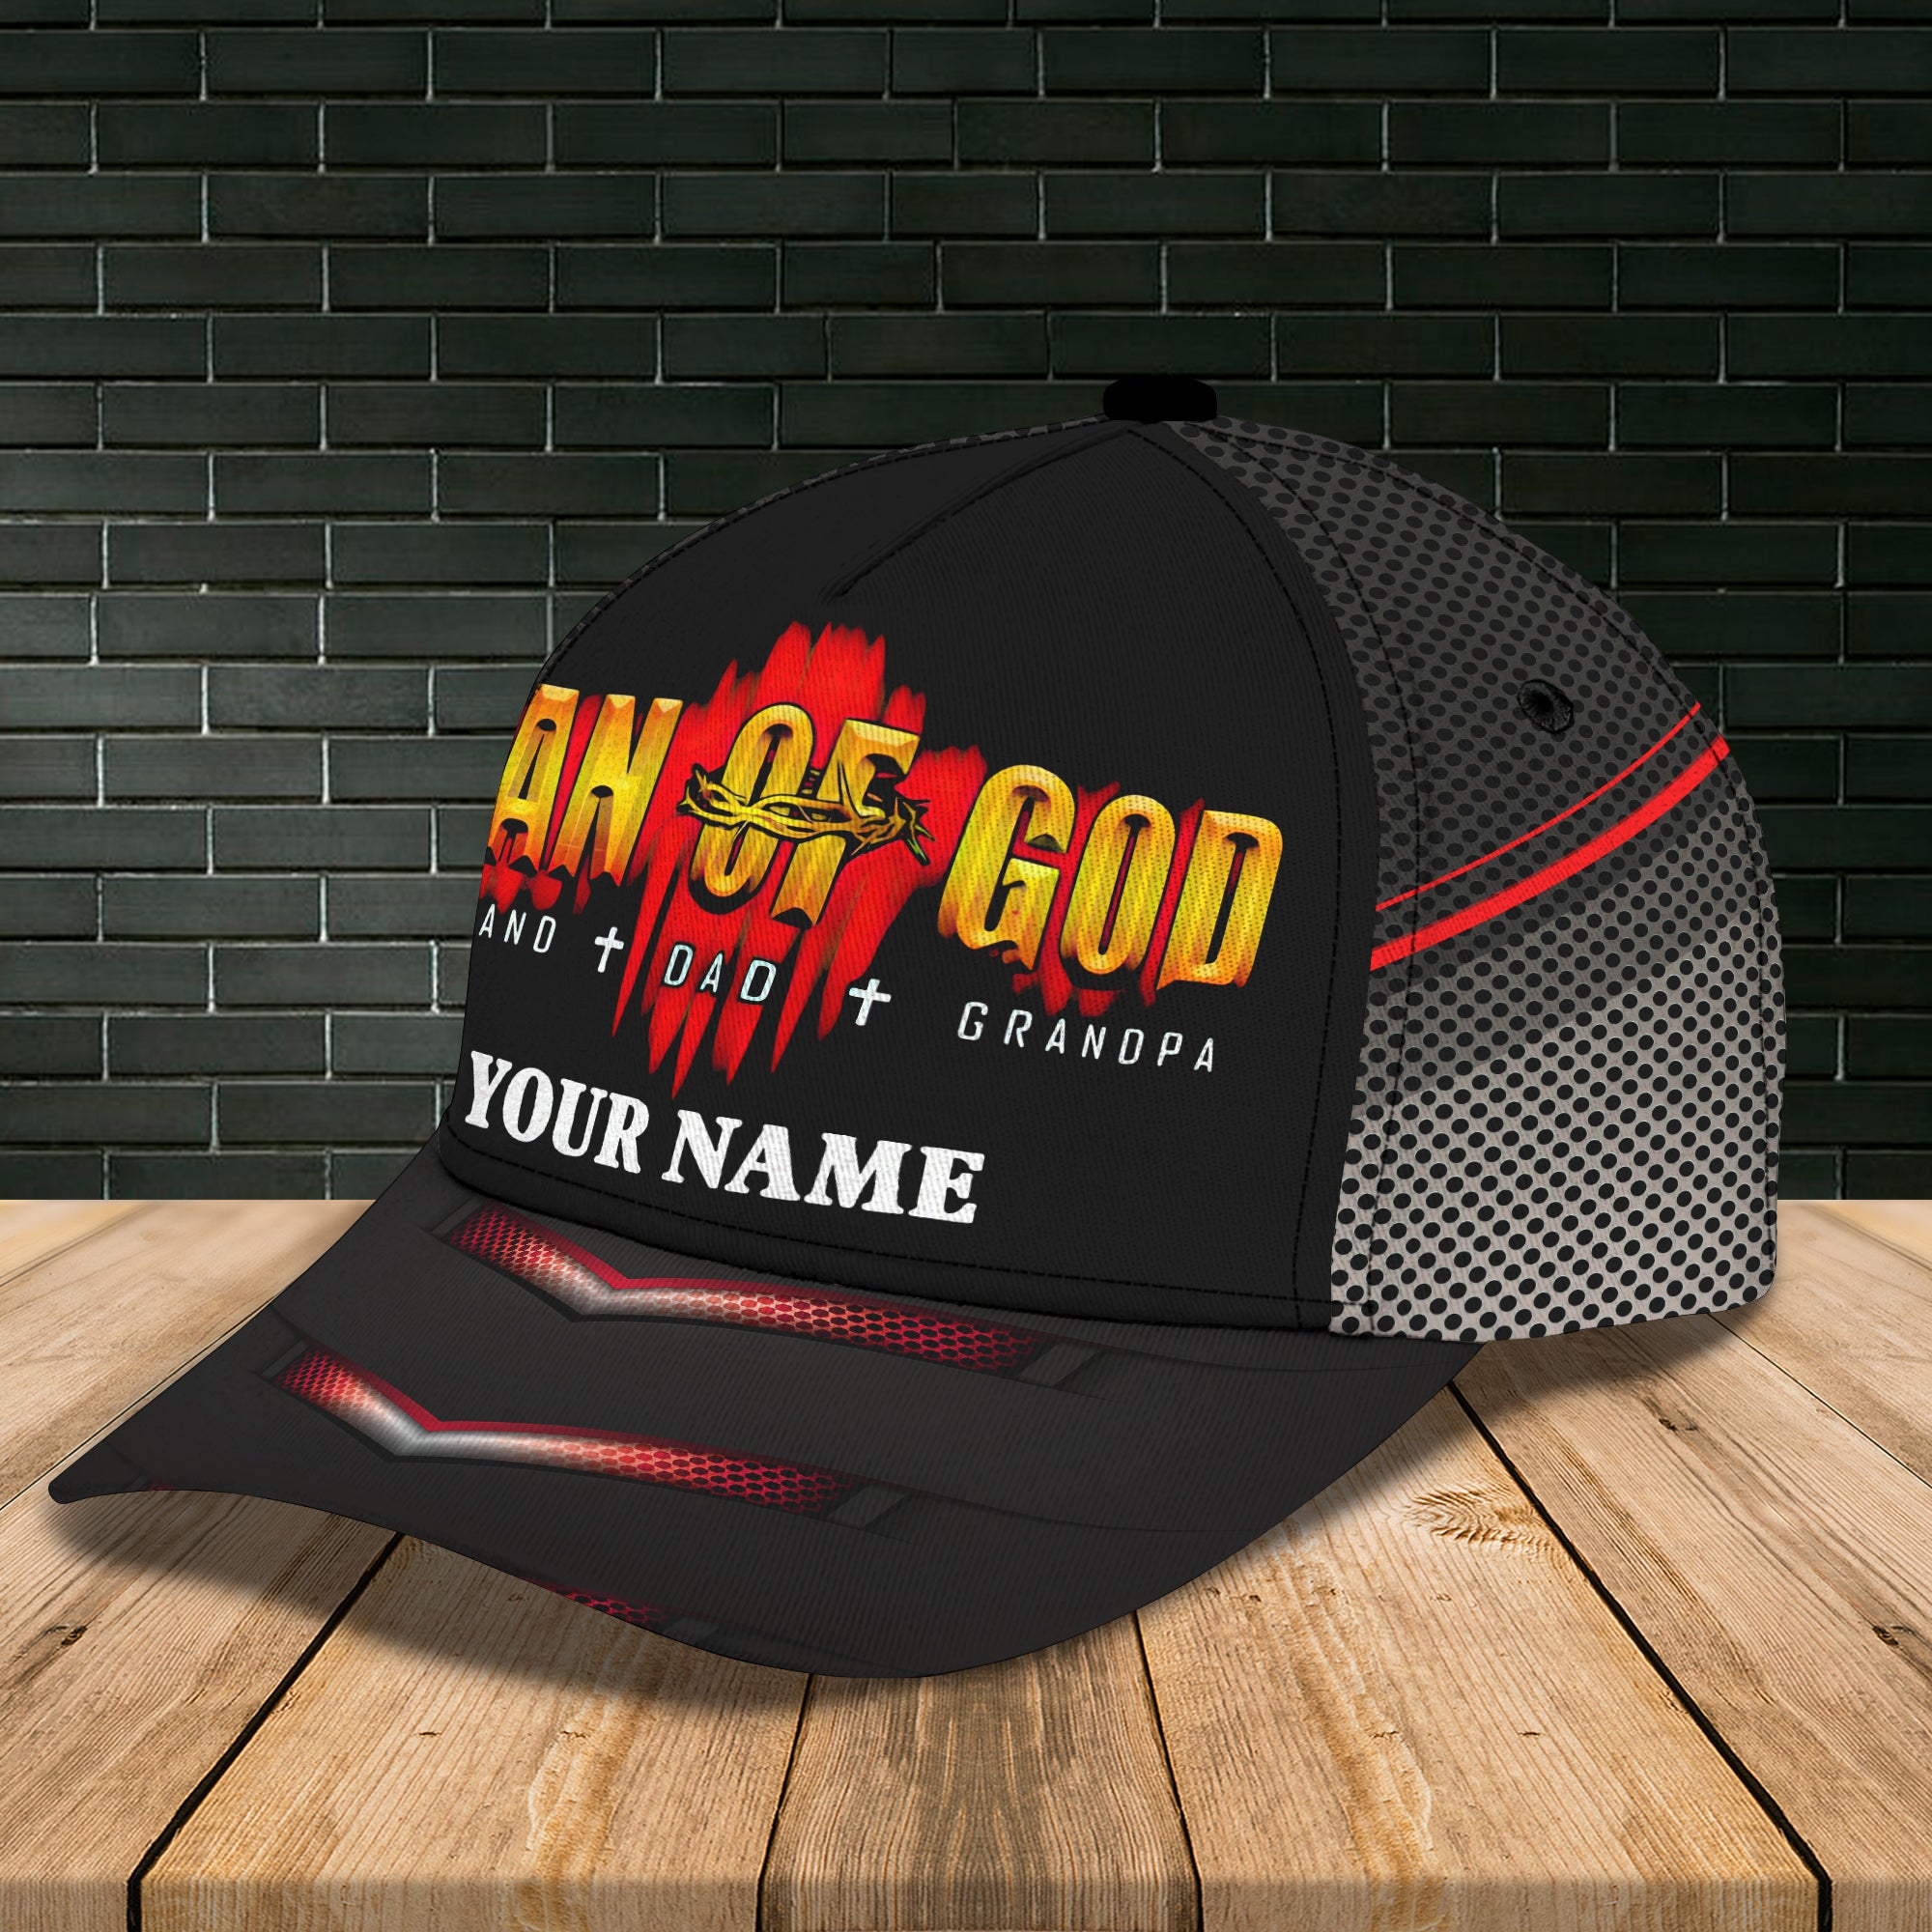 God Man - Personalized Name Cap - Boom - Hkm